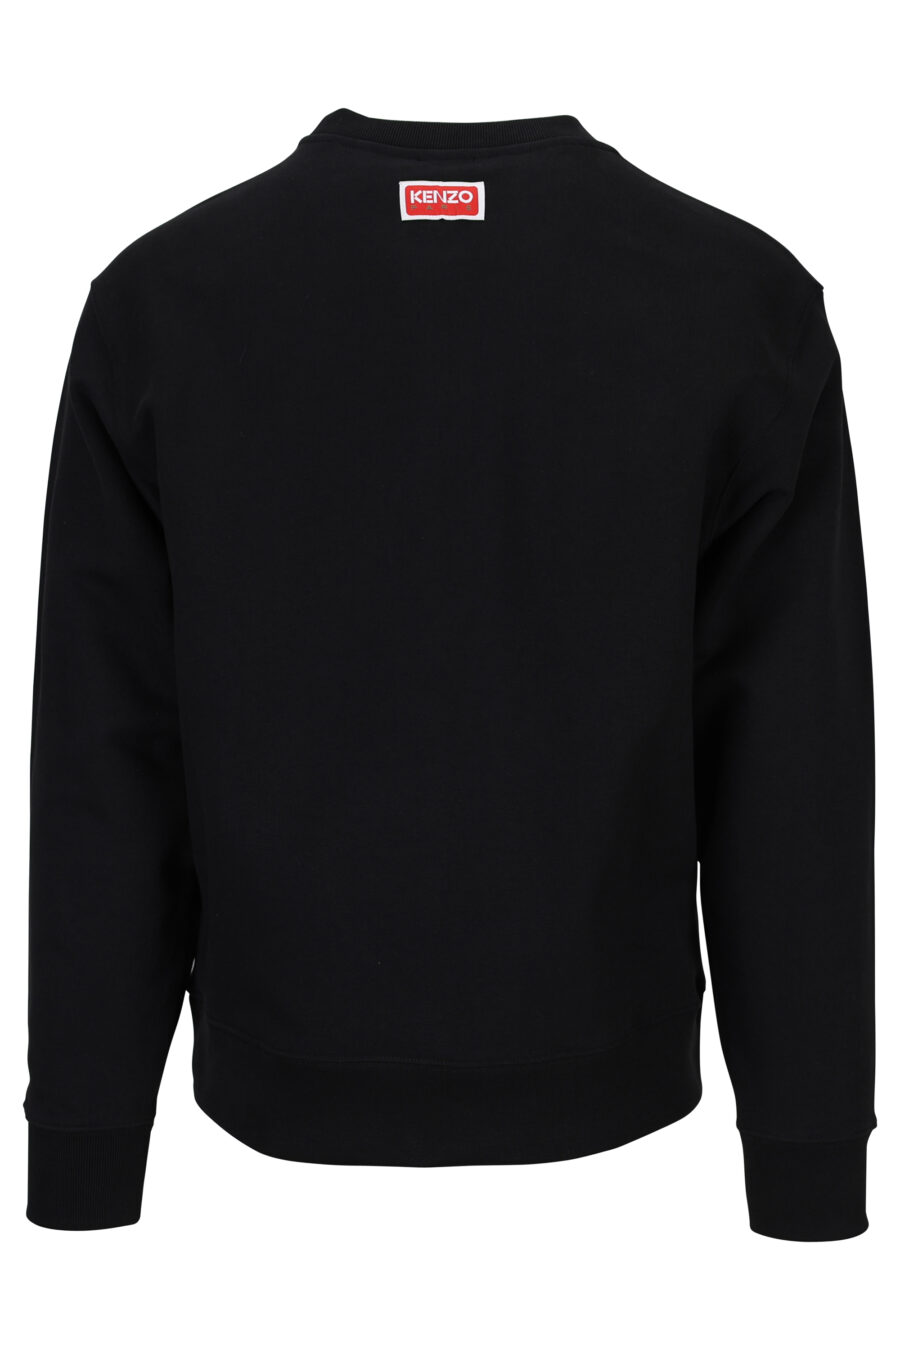 Black sweatshirt with maxilogo "boke flower" - 3612230482692 1